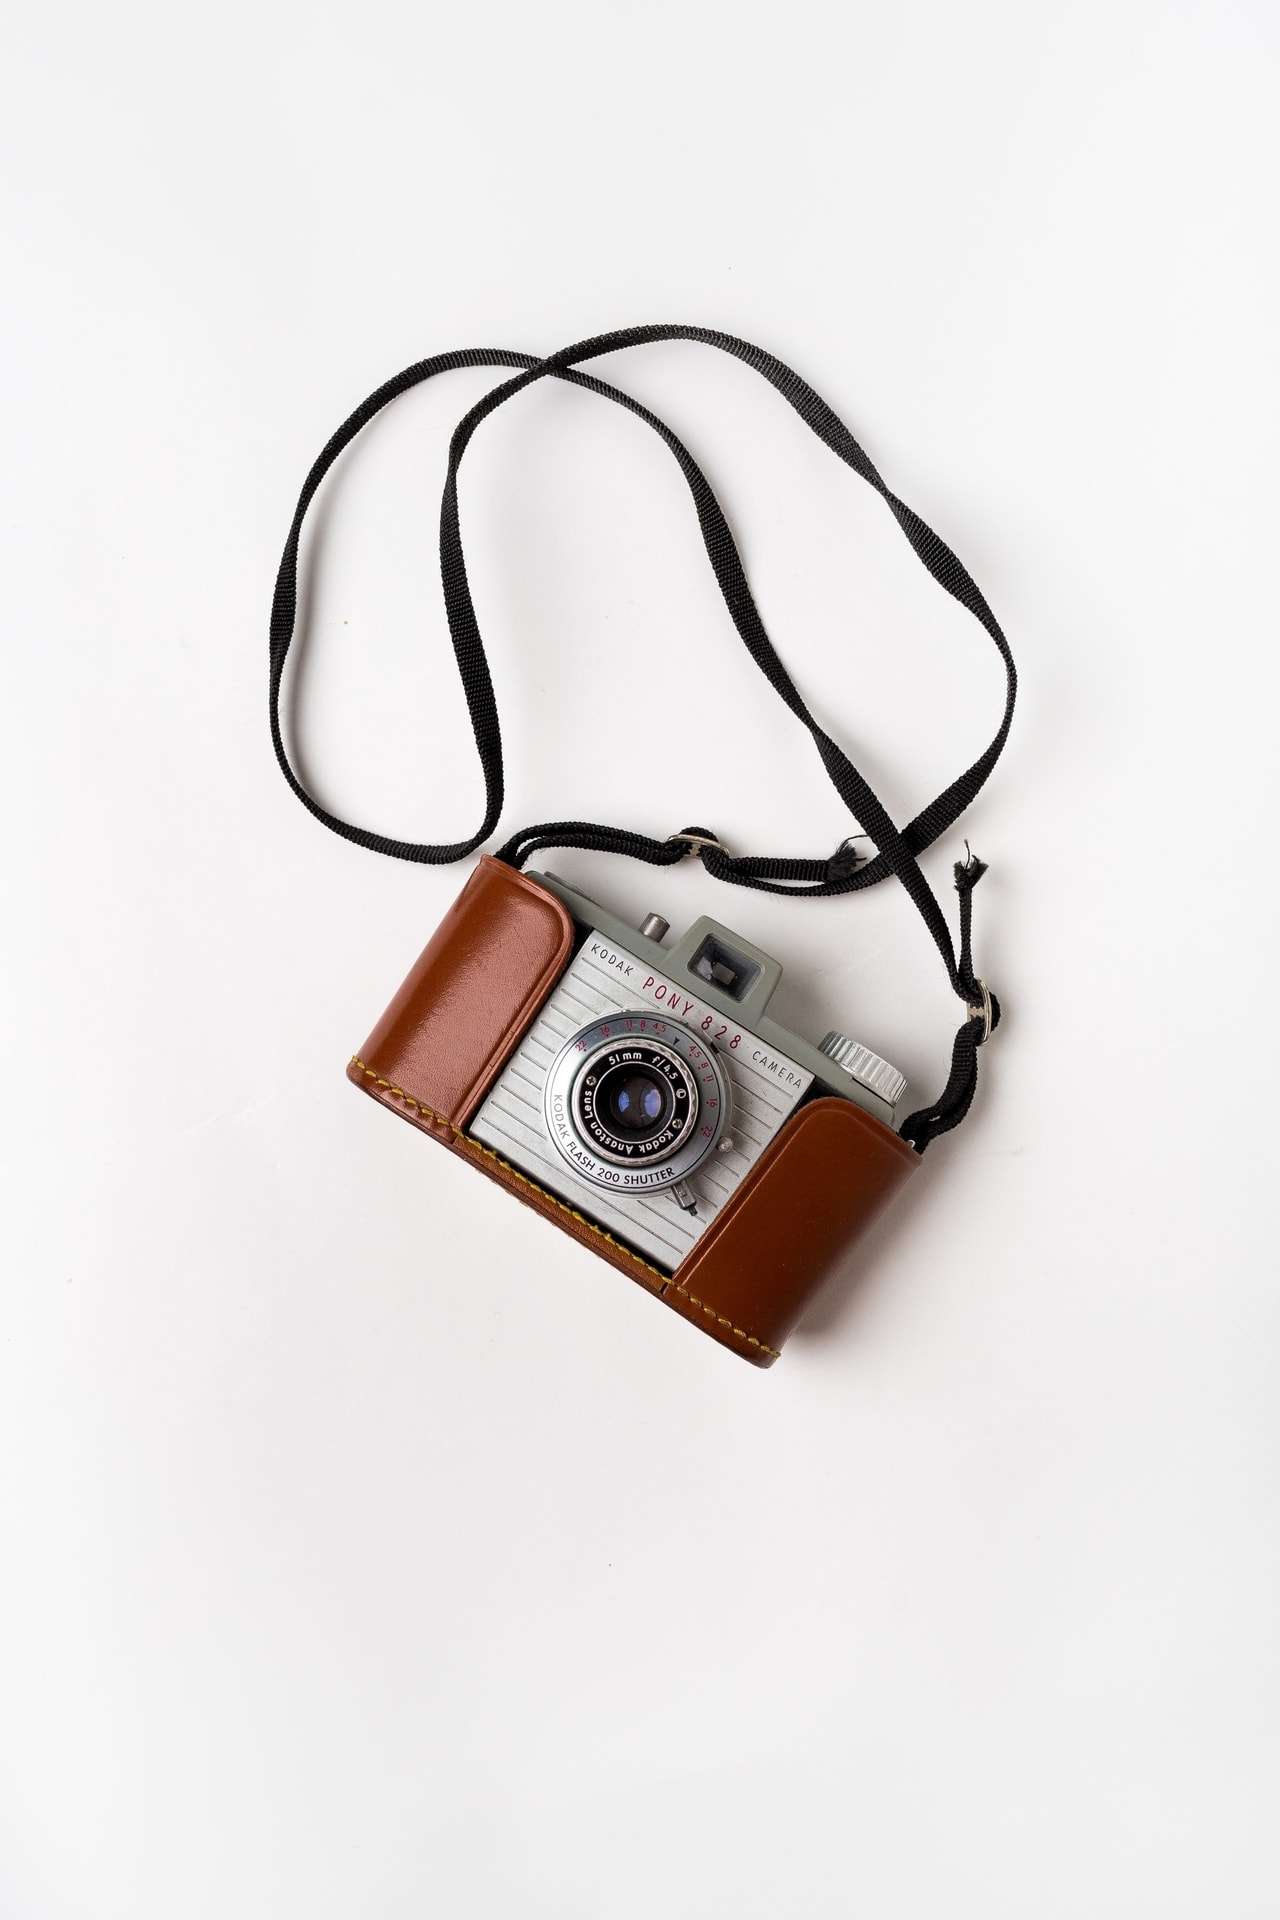 Vintage kodak fotocamera met leren hoes en bandje